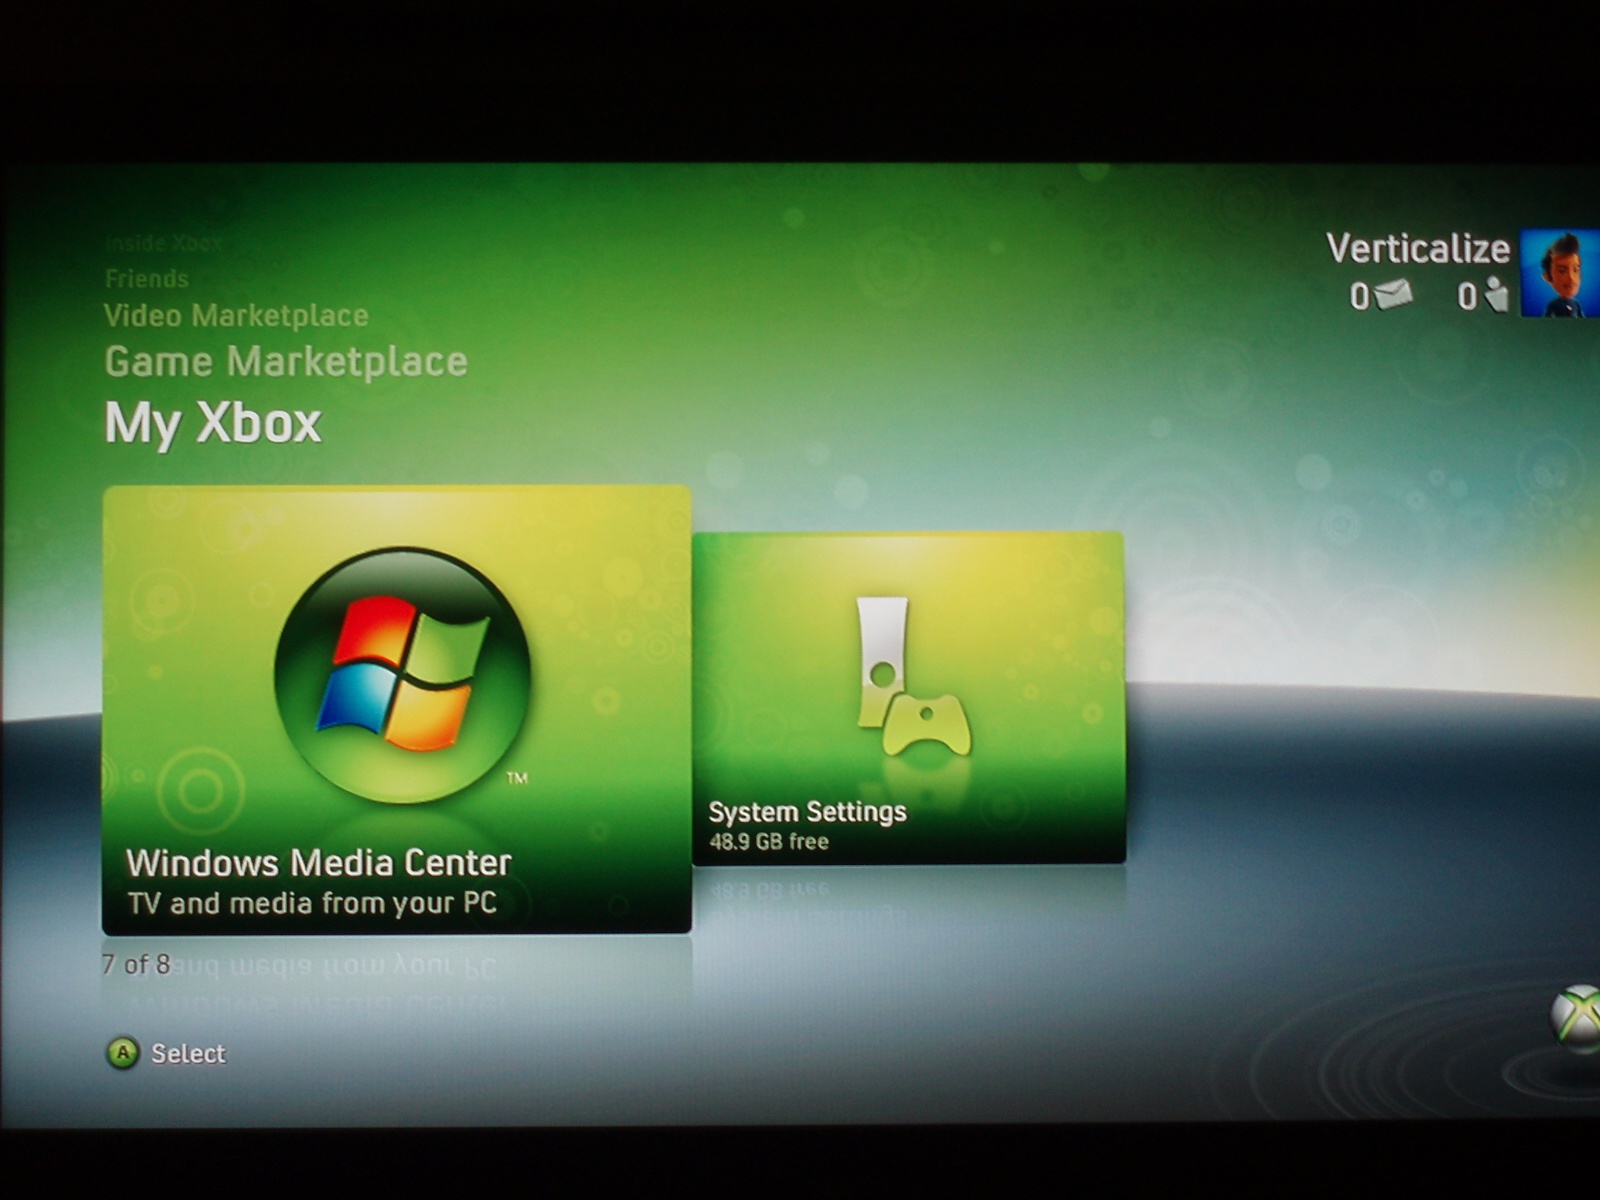 My Xbox - Windows Media Center - Picture - Image - Photo1600 x 1200